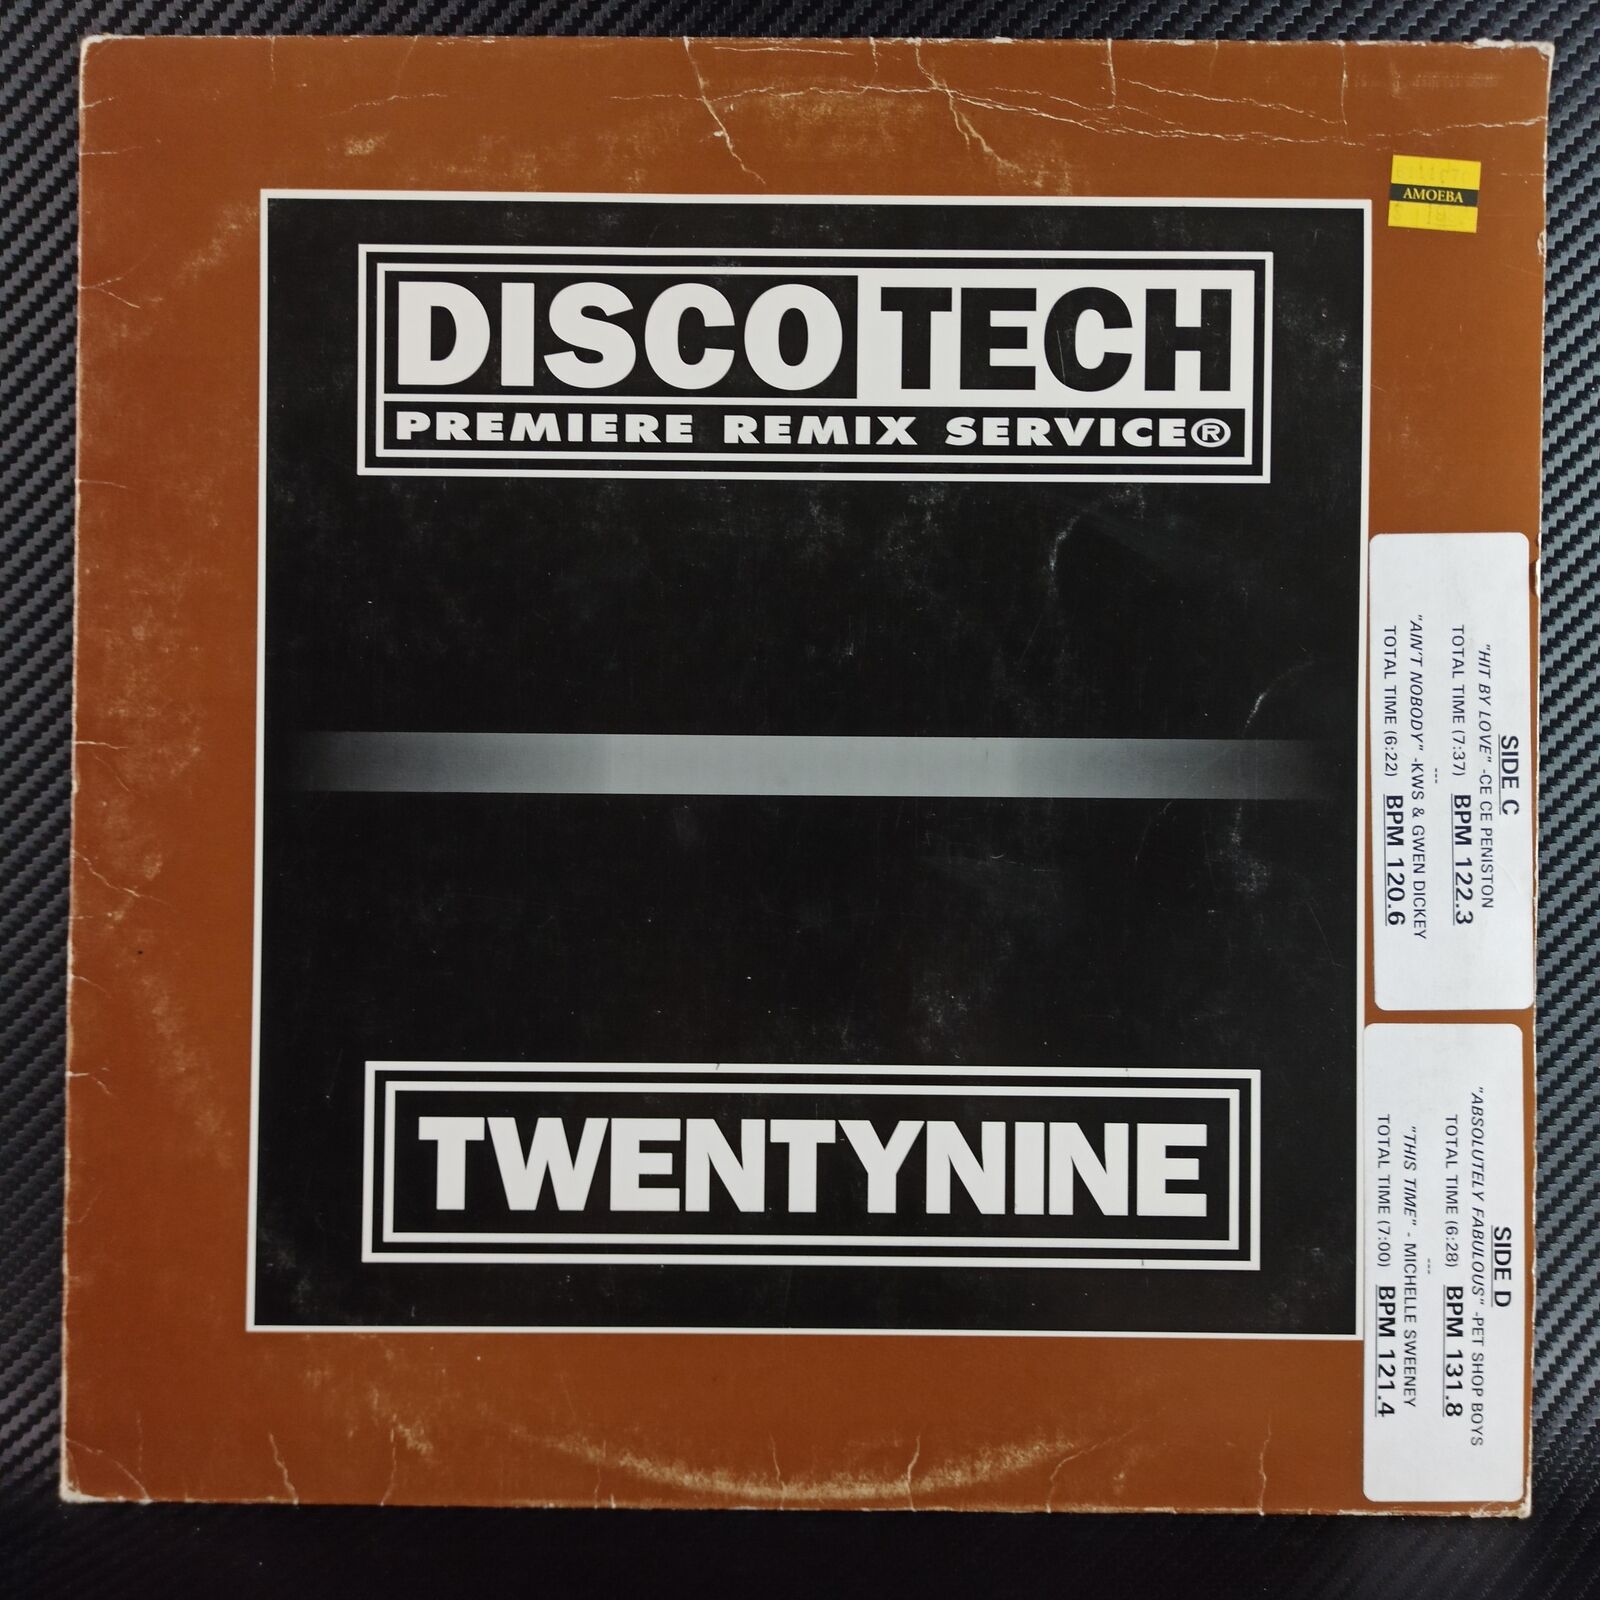 DiscoTech Premiere Remix Service TwentyNine Vinyl LP Record (VG/VG) PROMO